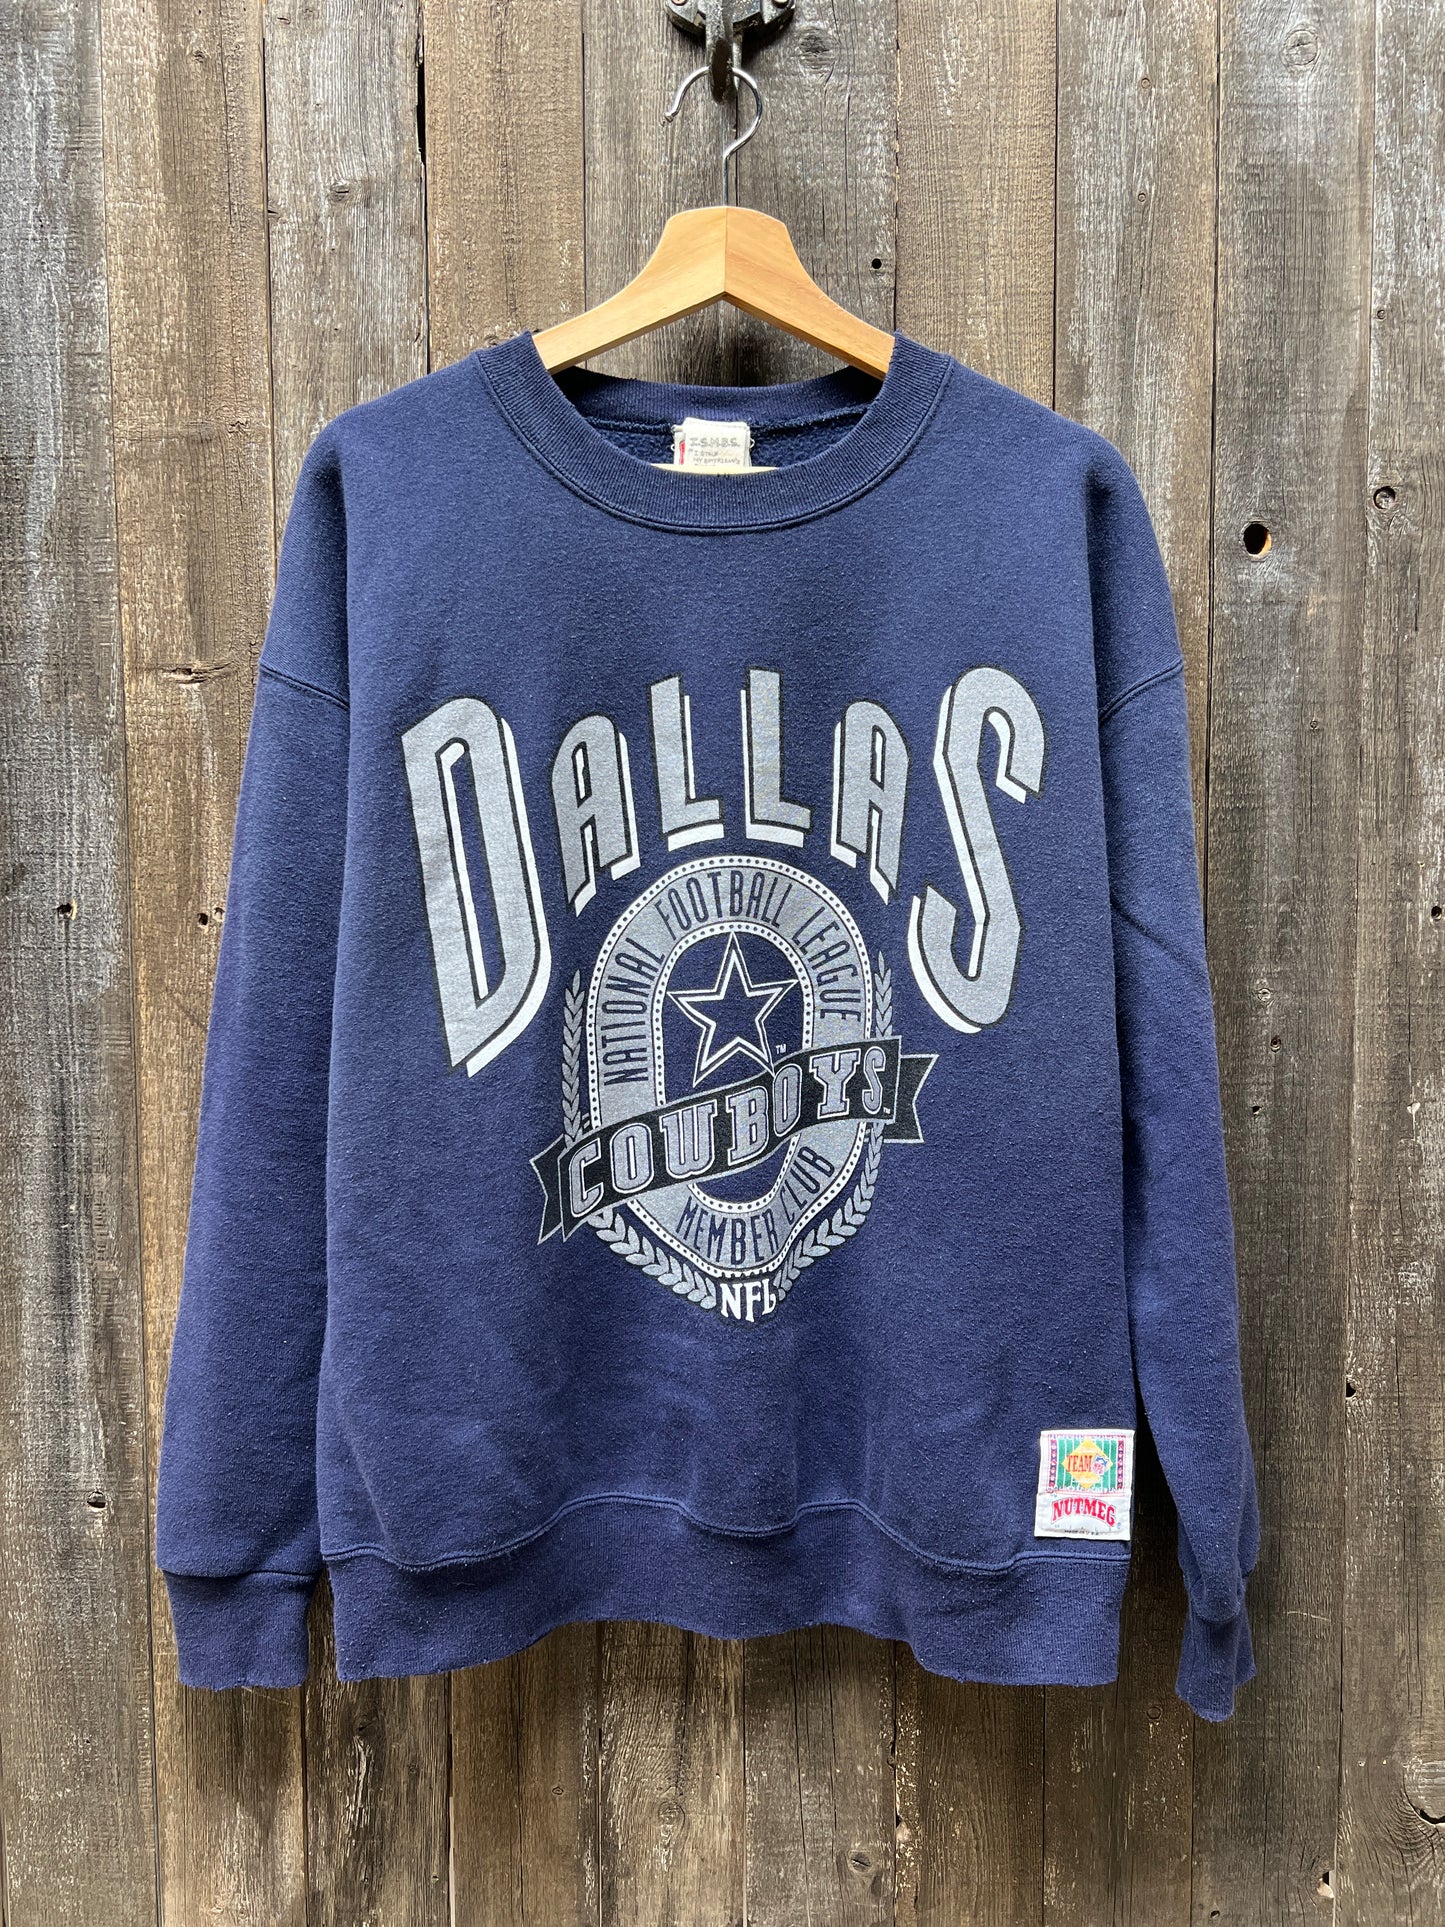 Dallas Cowboys Sweatshirt -XL-Customize Your Embroidery Wording